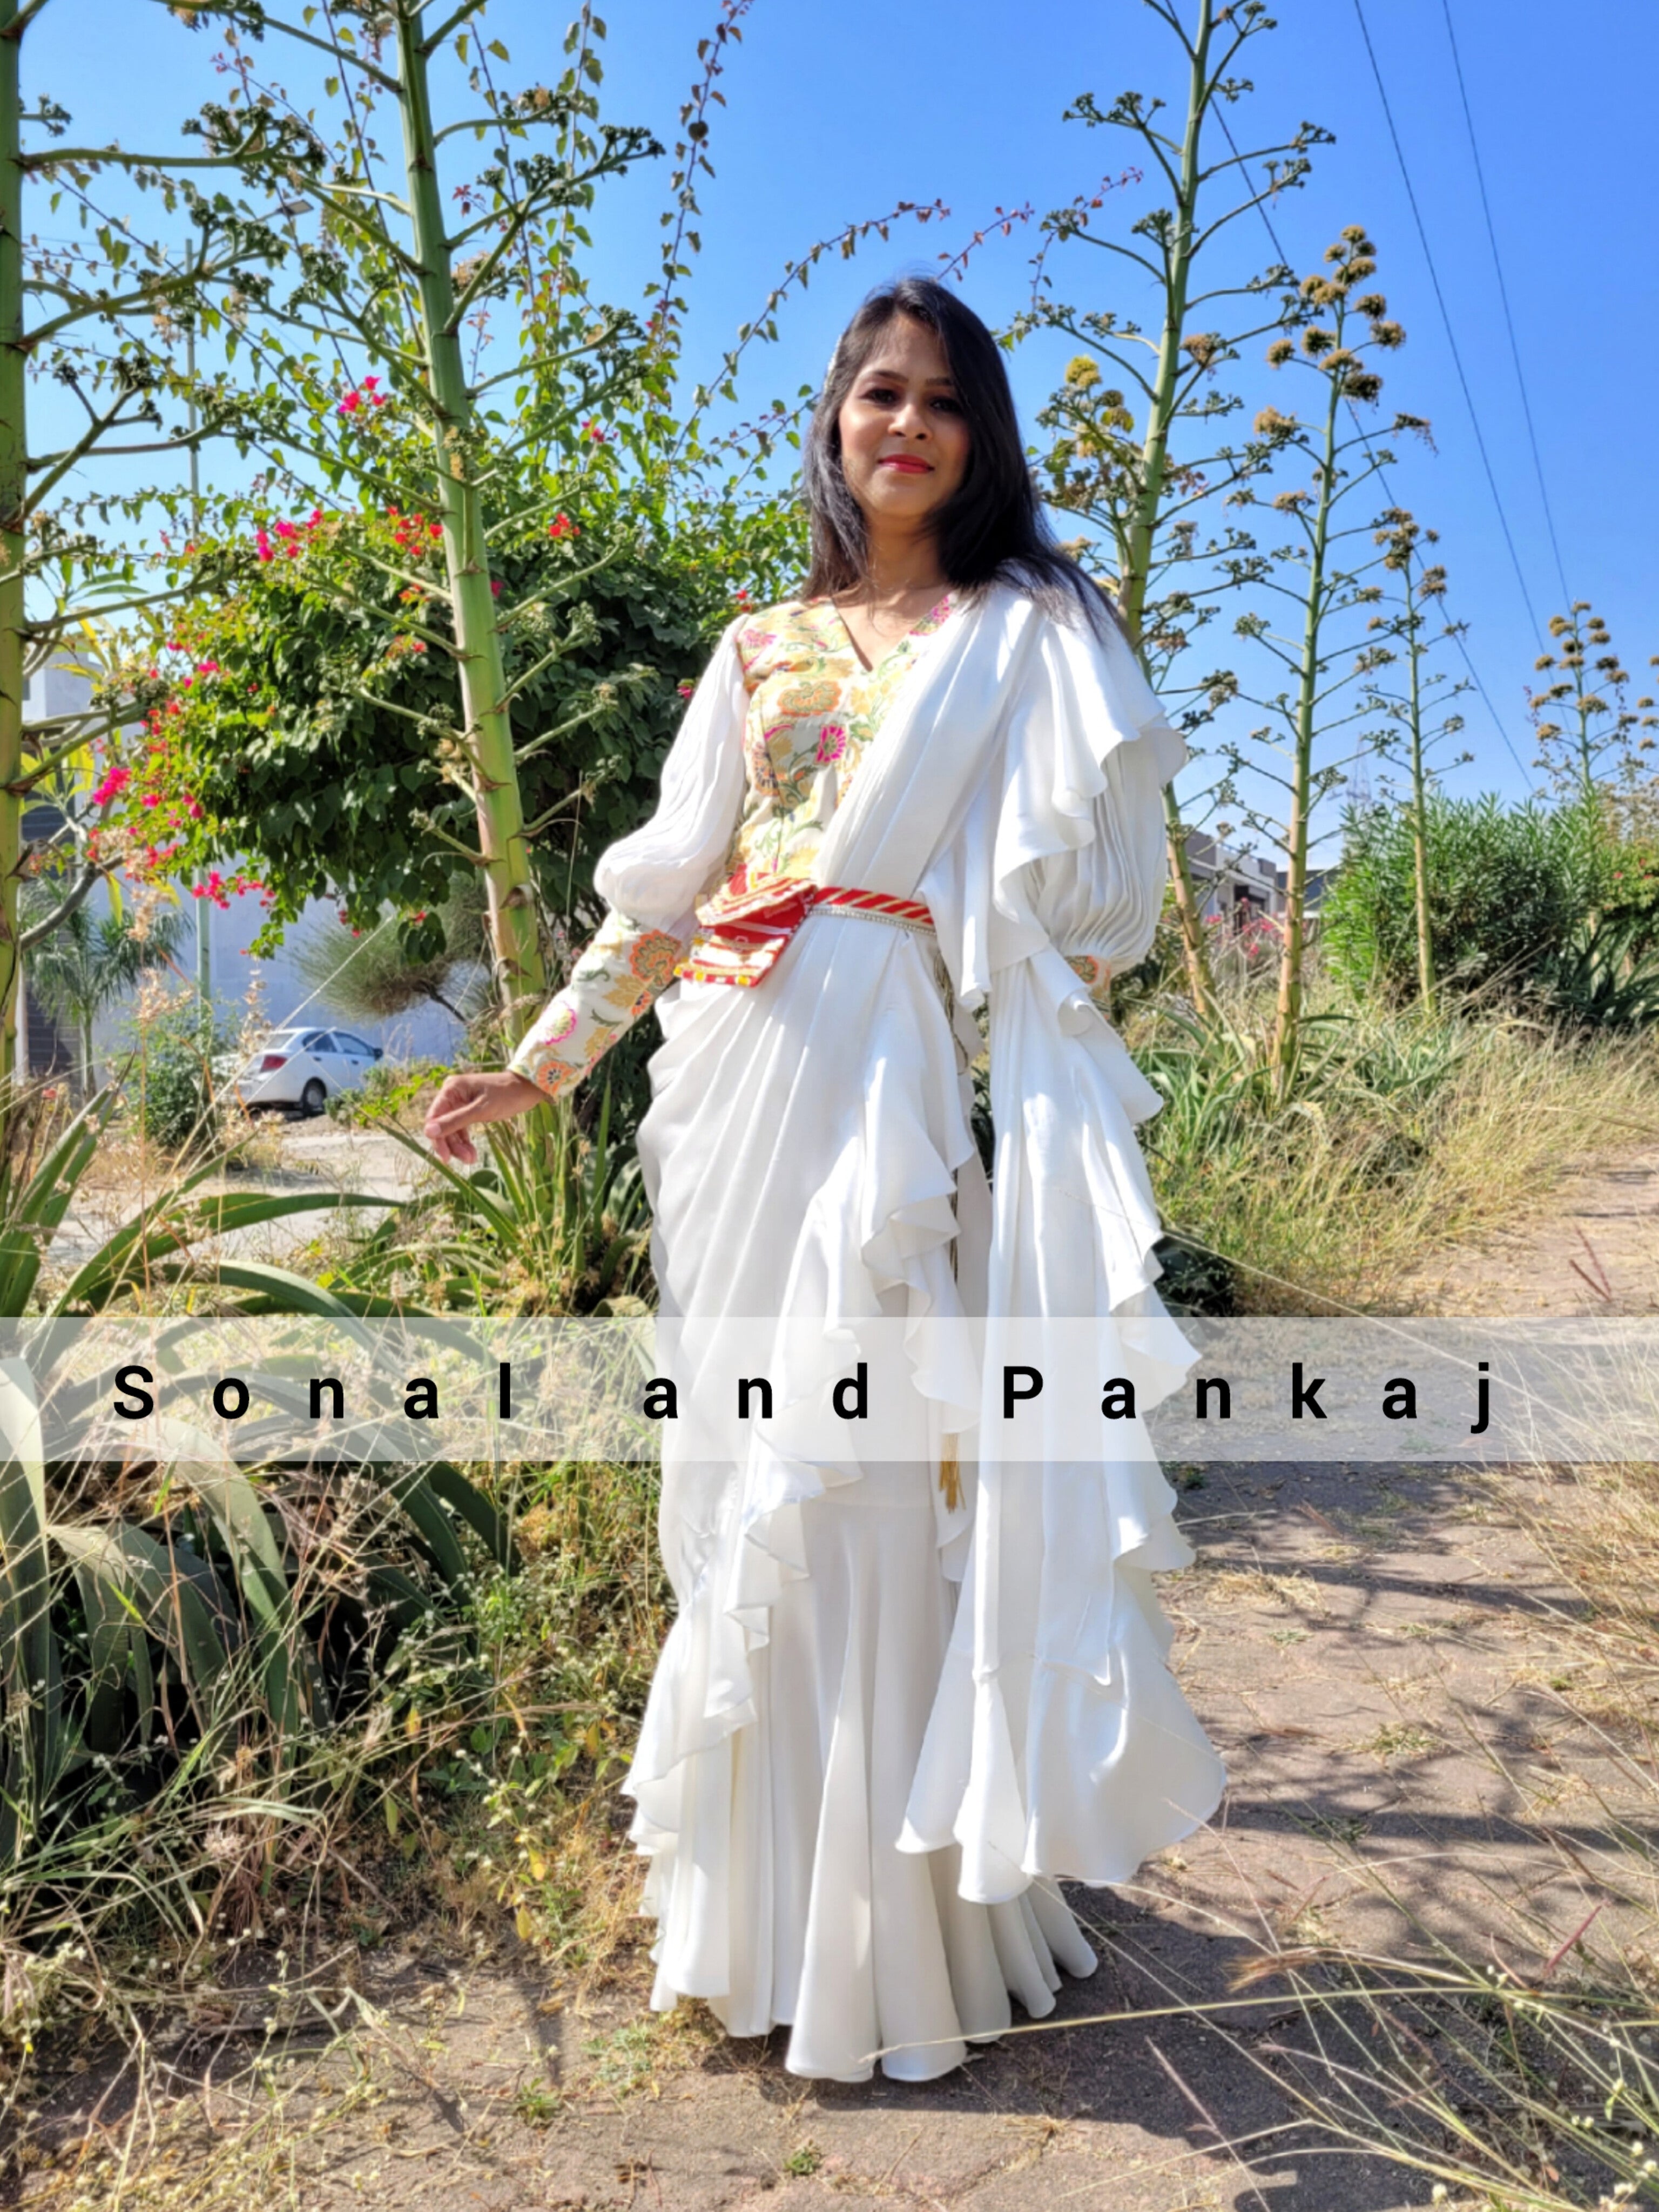 Janhvi Kapoor aces saree-style gown